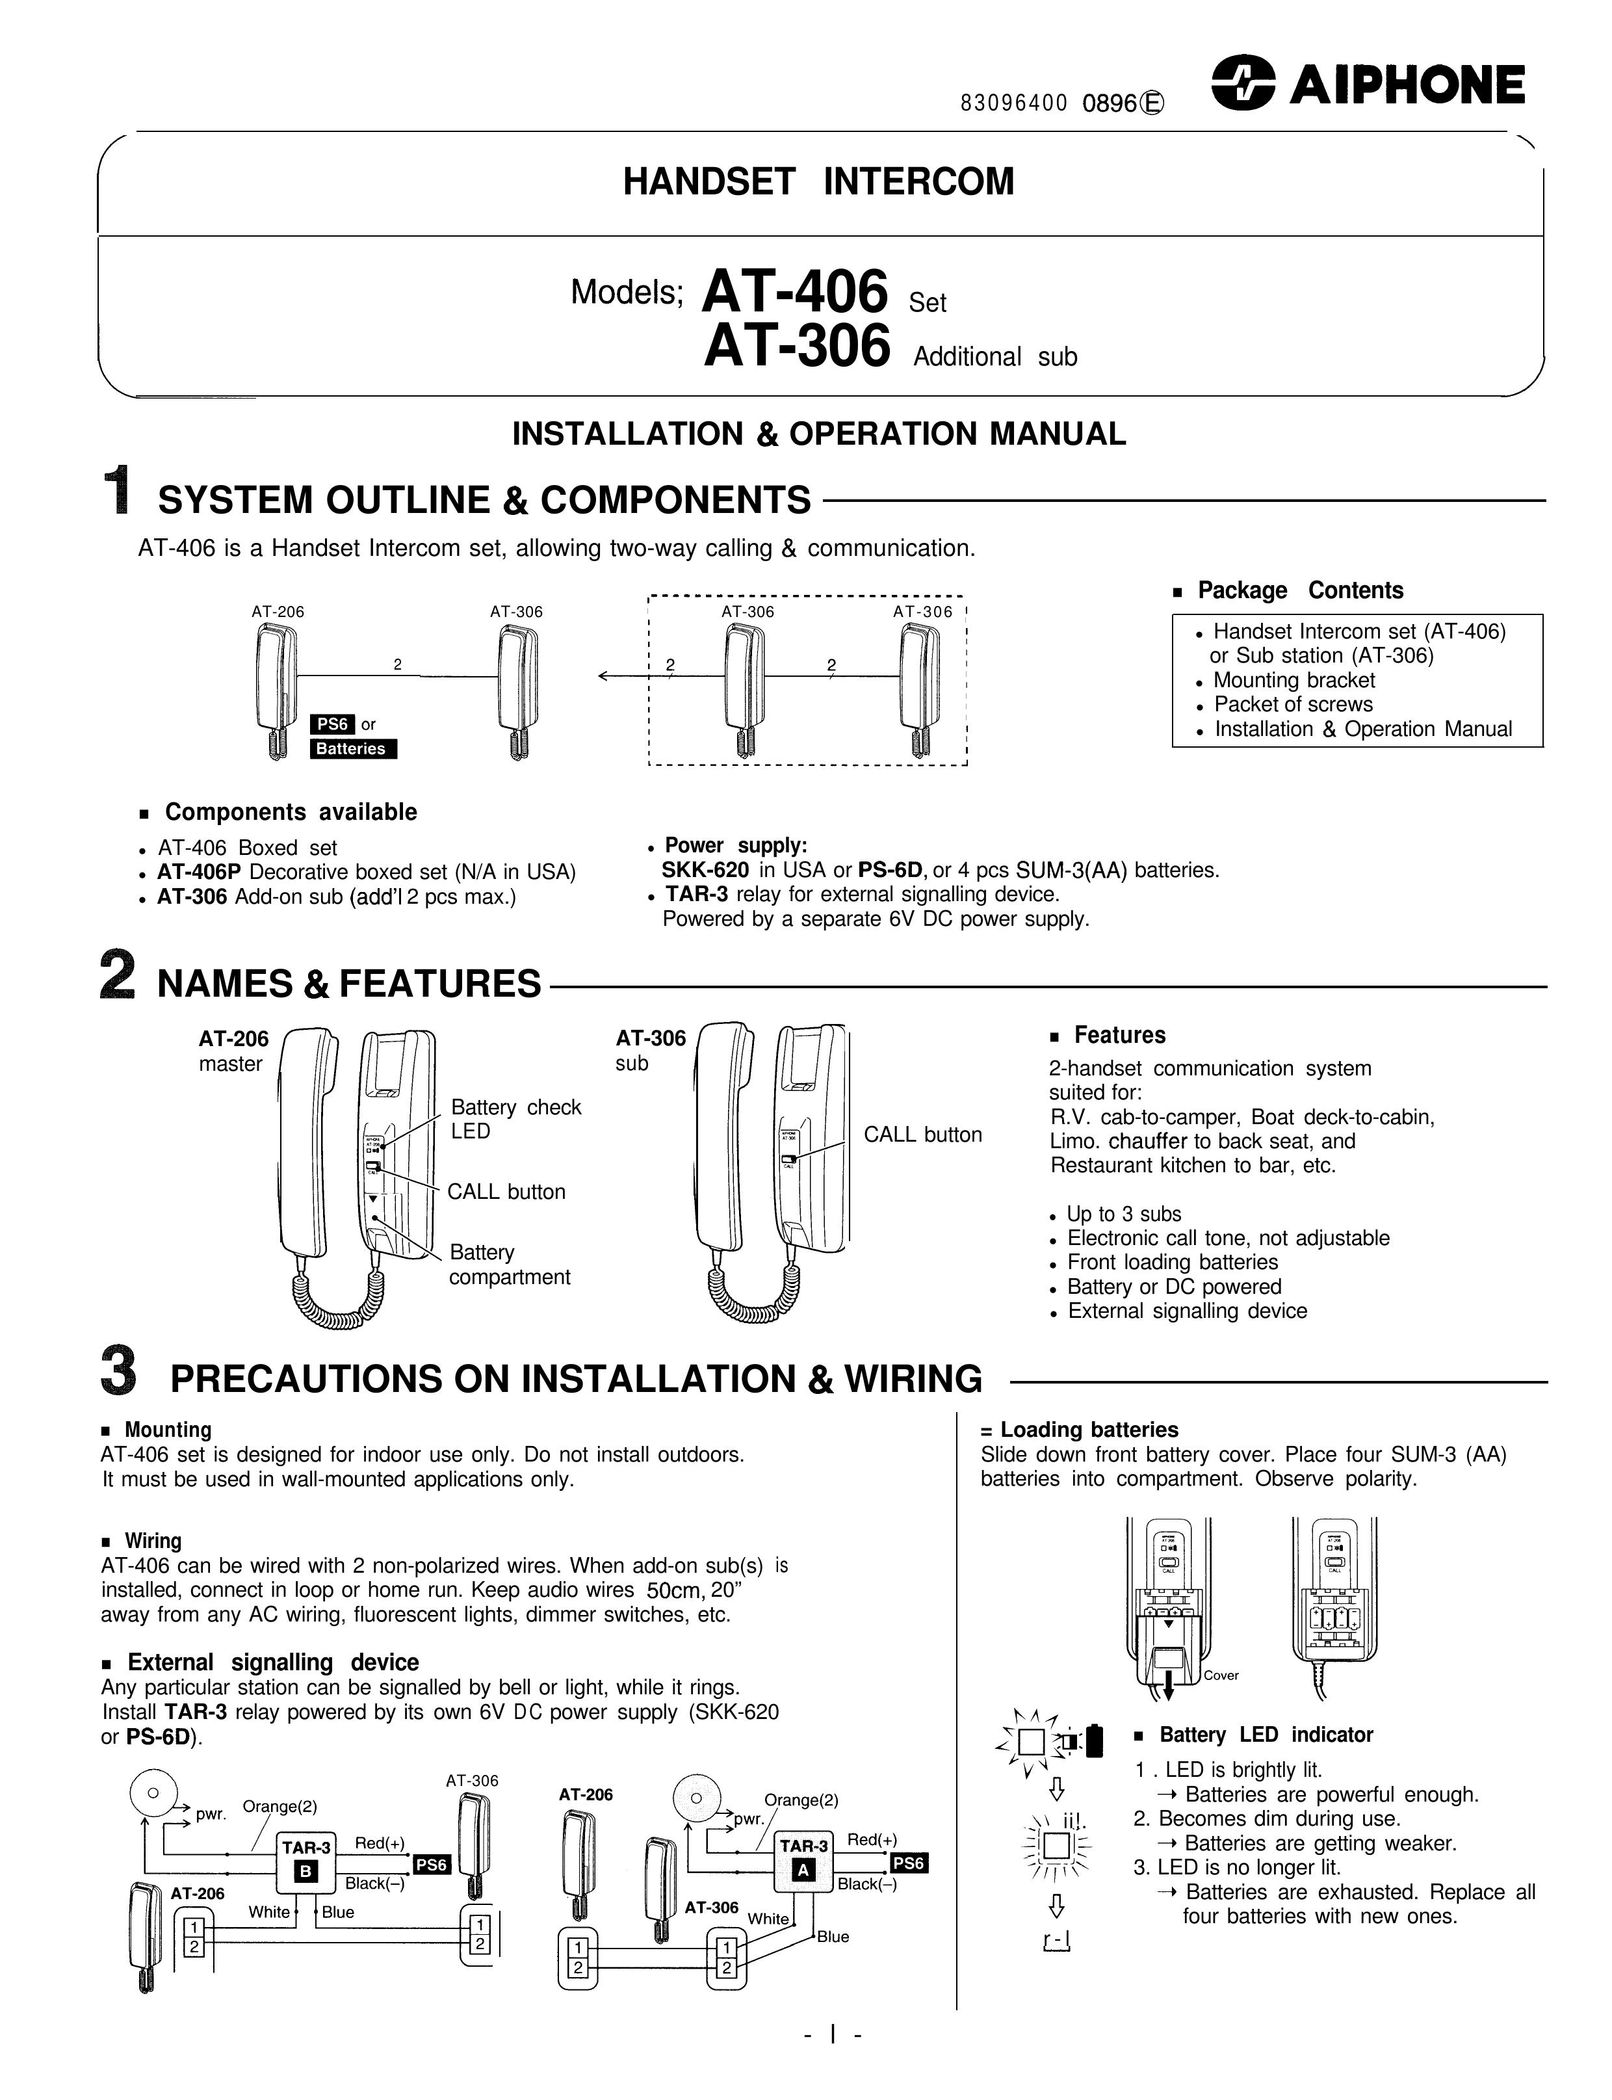 Aiphone AT-406 Intercom System User Manual